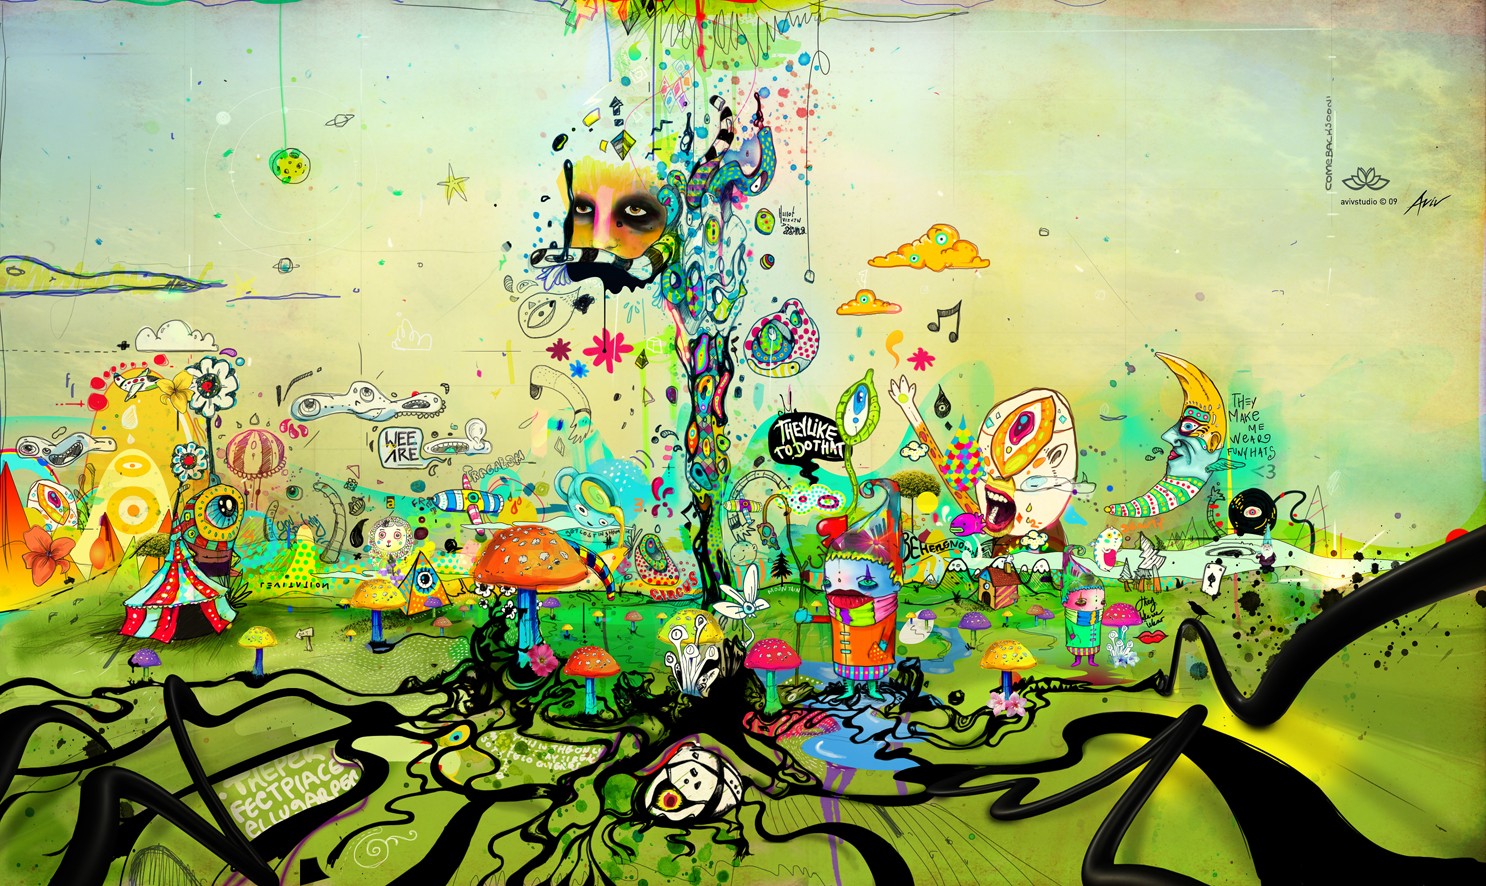 Surreal psychedelic artwork